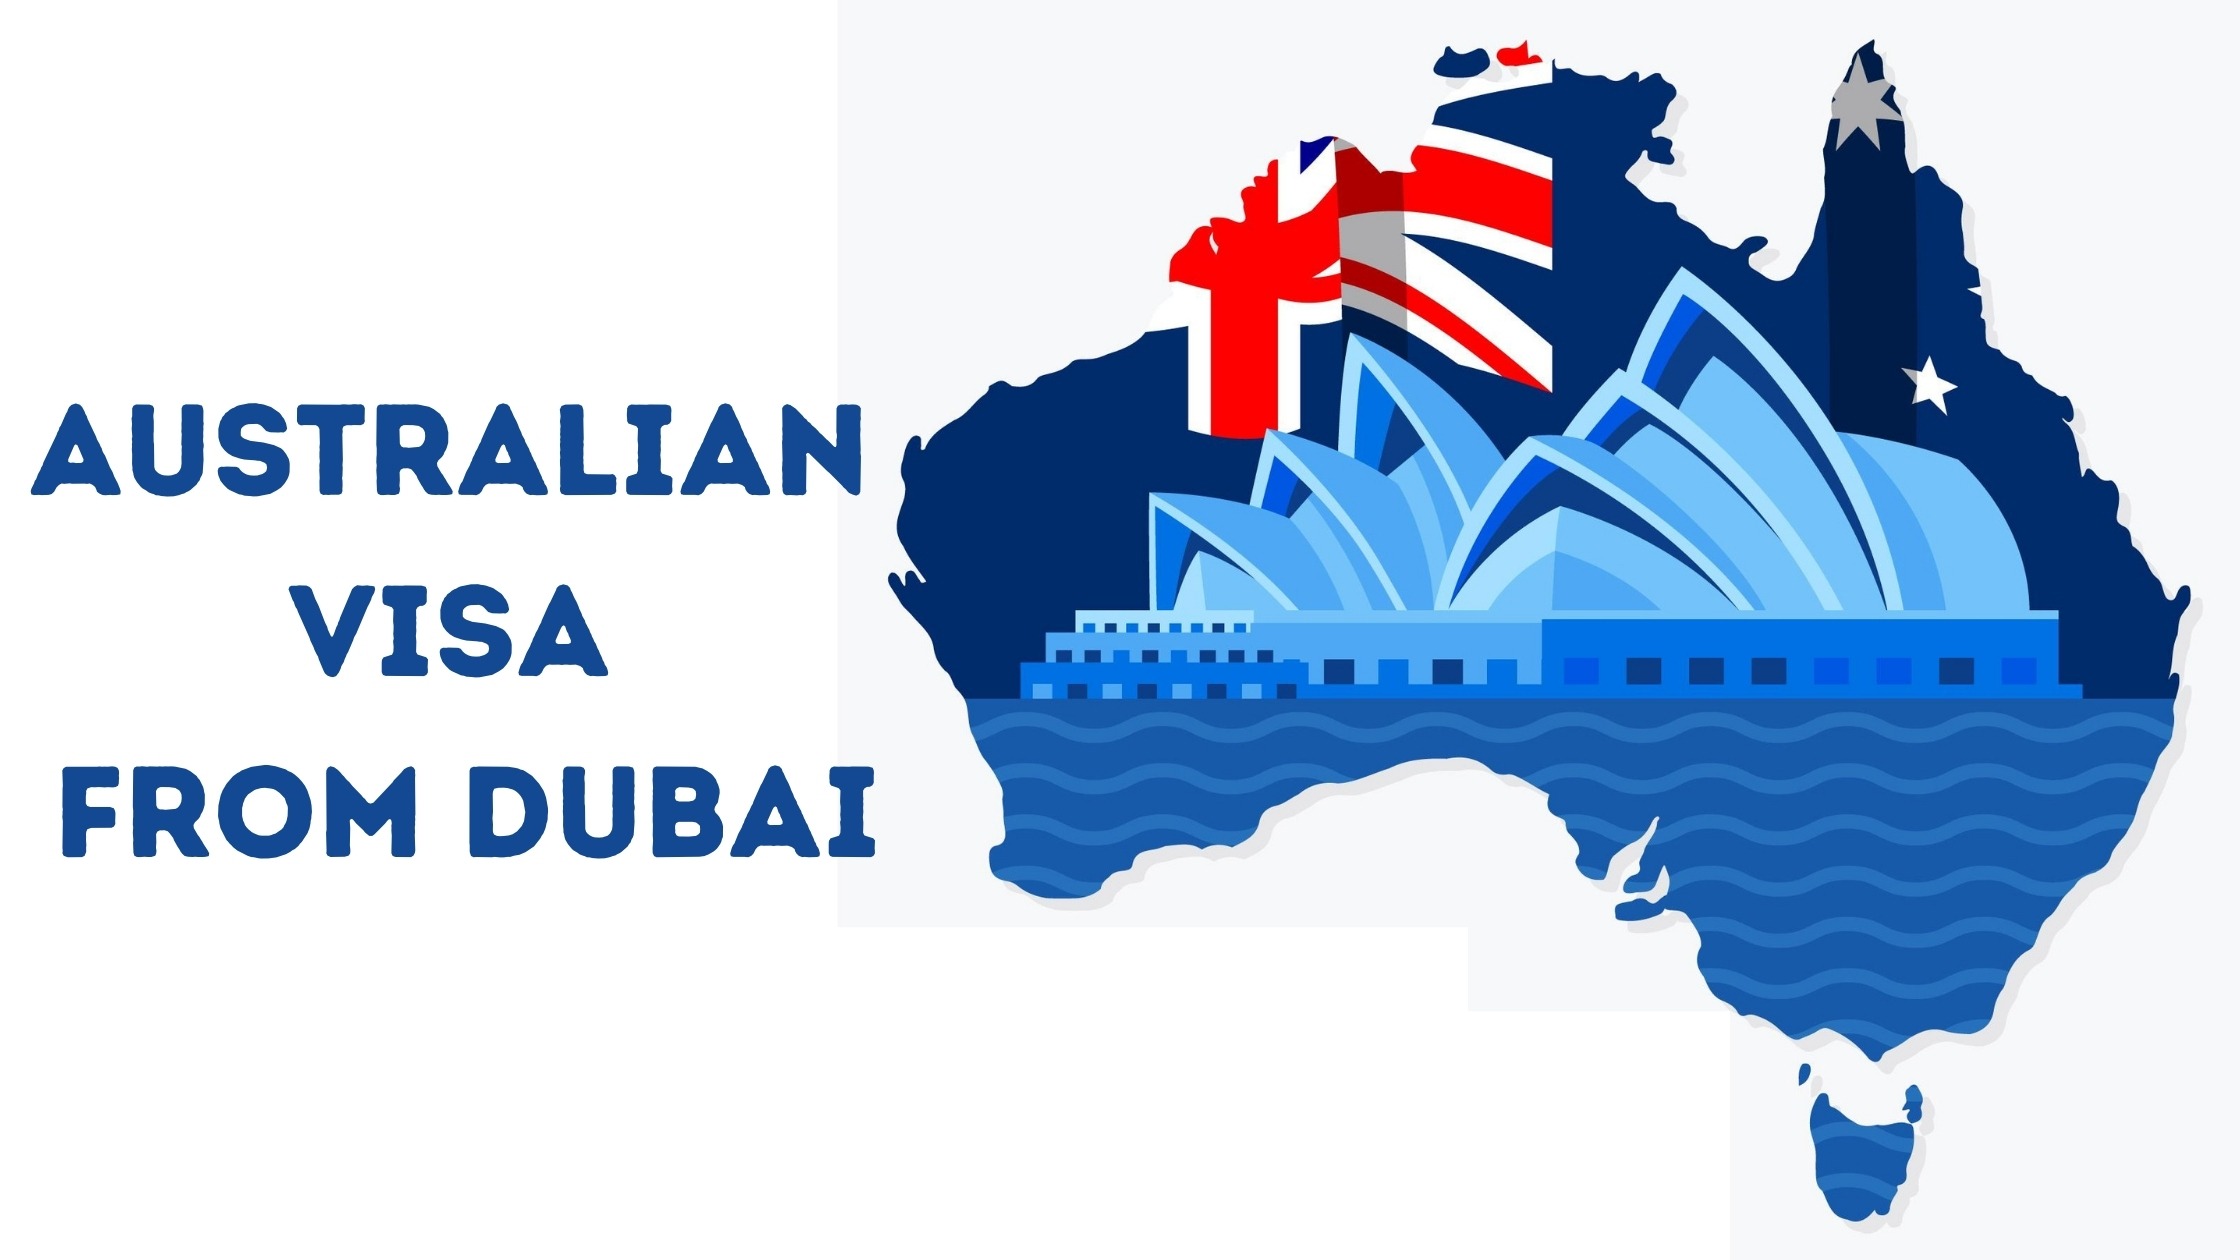 australia visit visa requirements from dubai